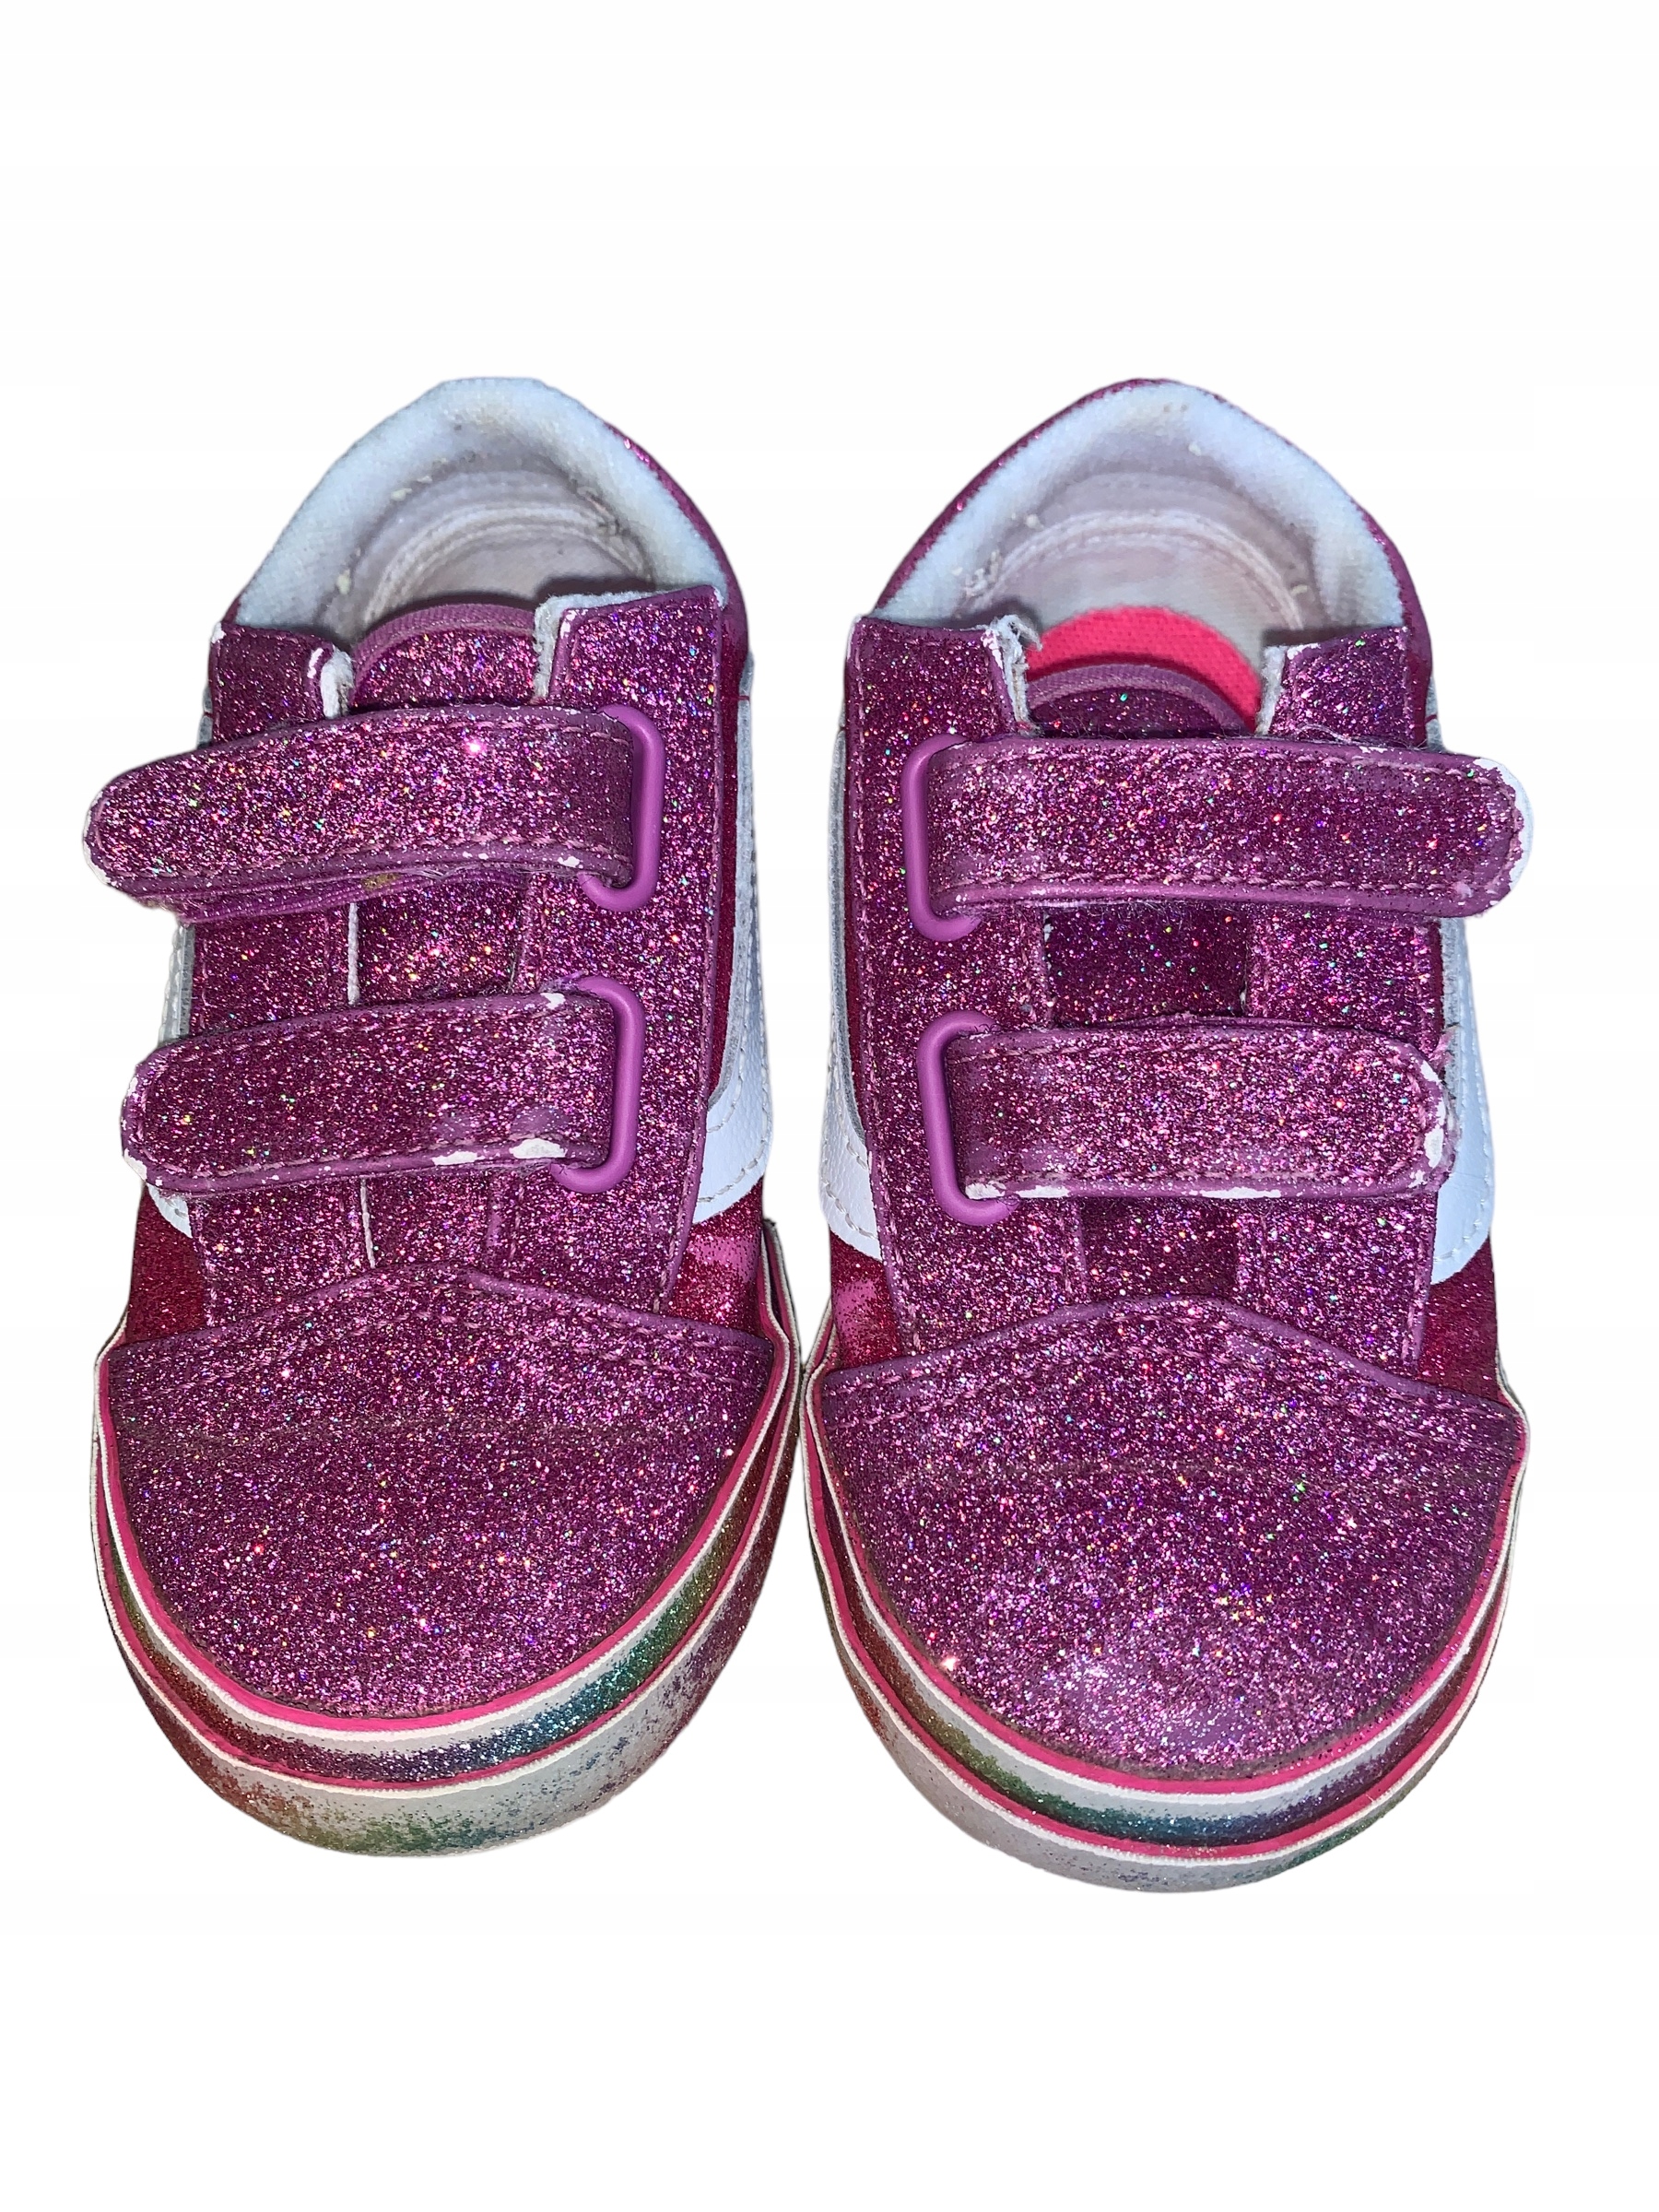 Buty brokatowe dziecięce VANS różowe 25 14016835023 - Allegro.pl